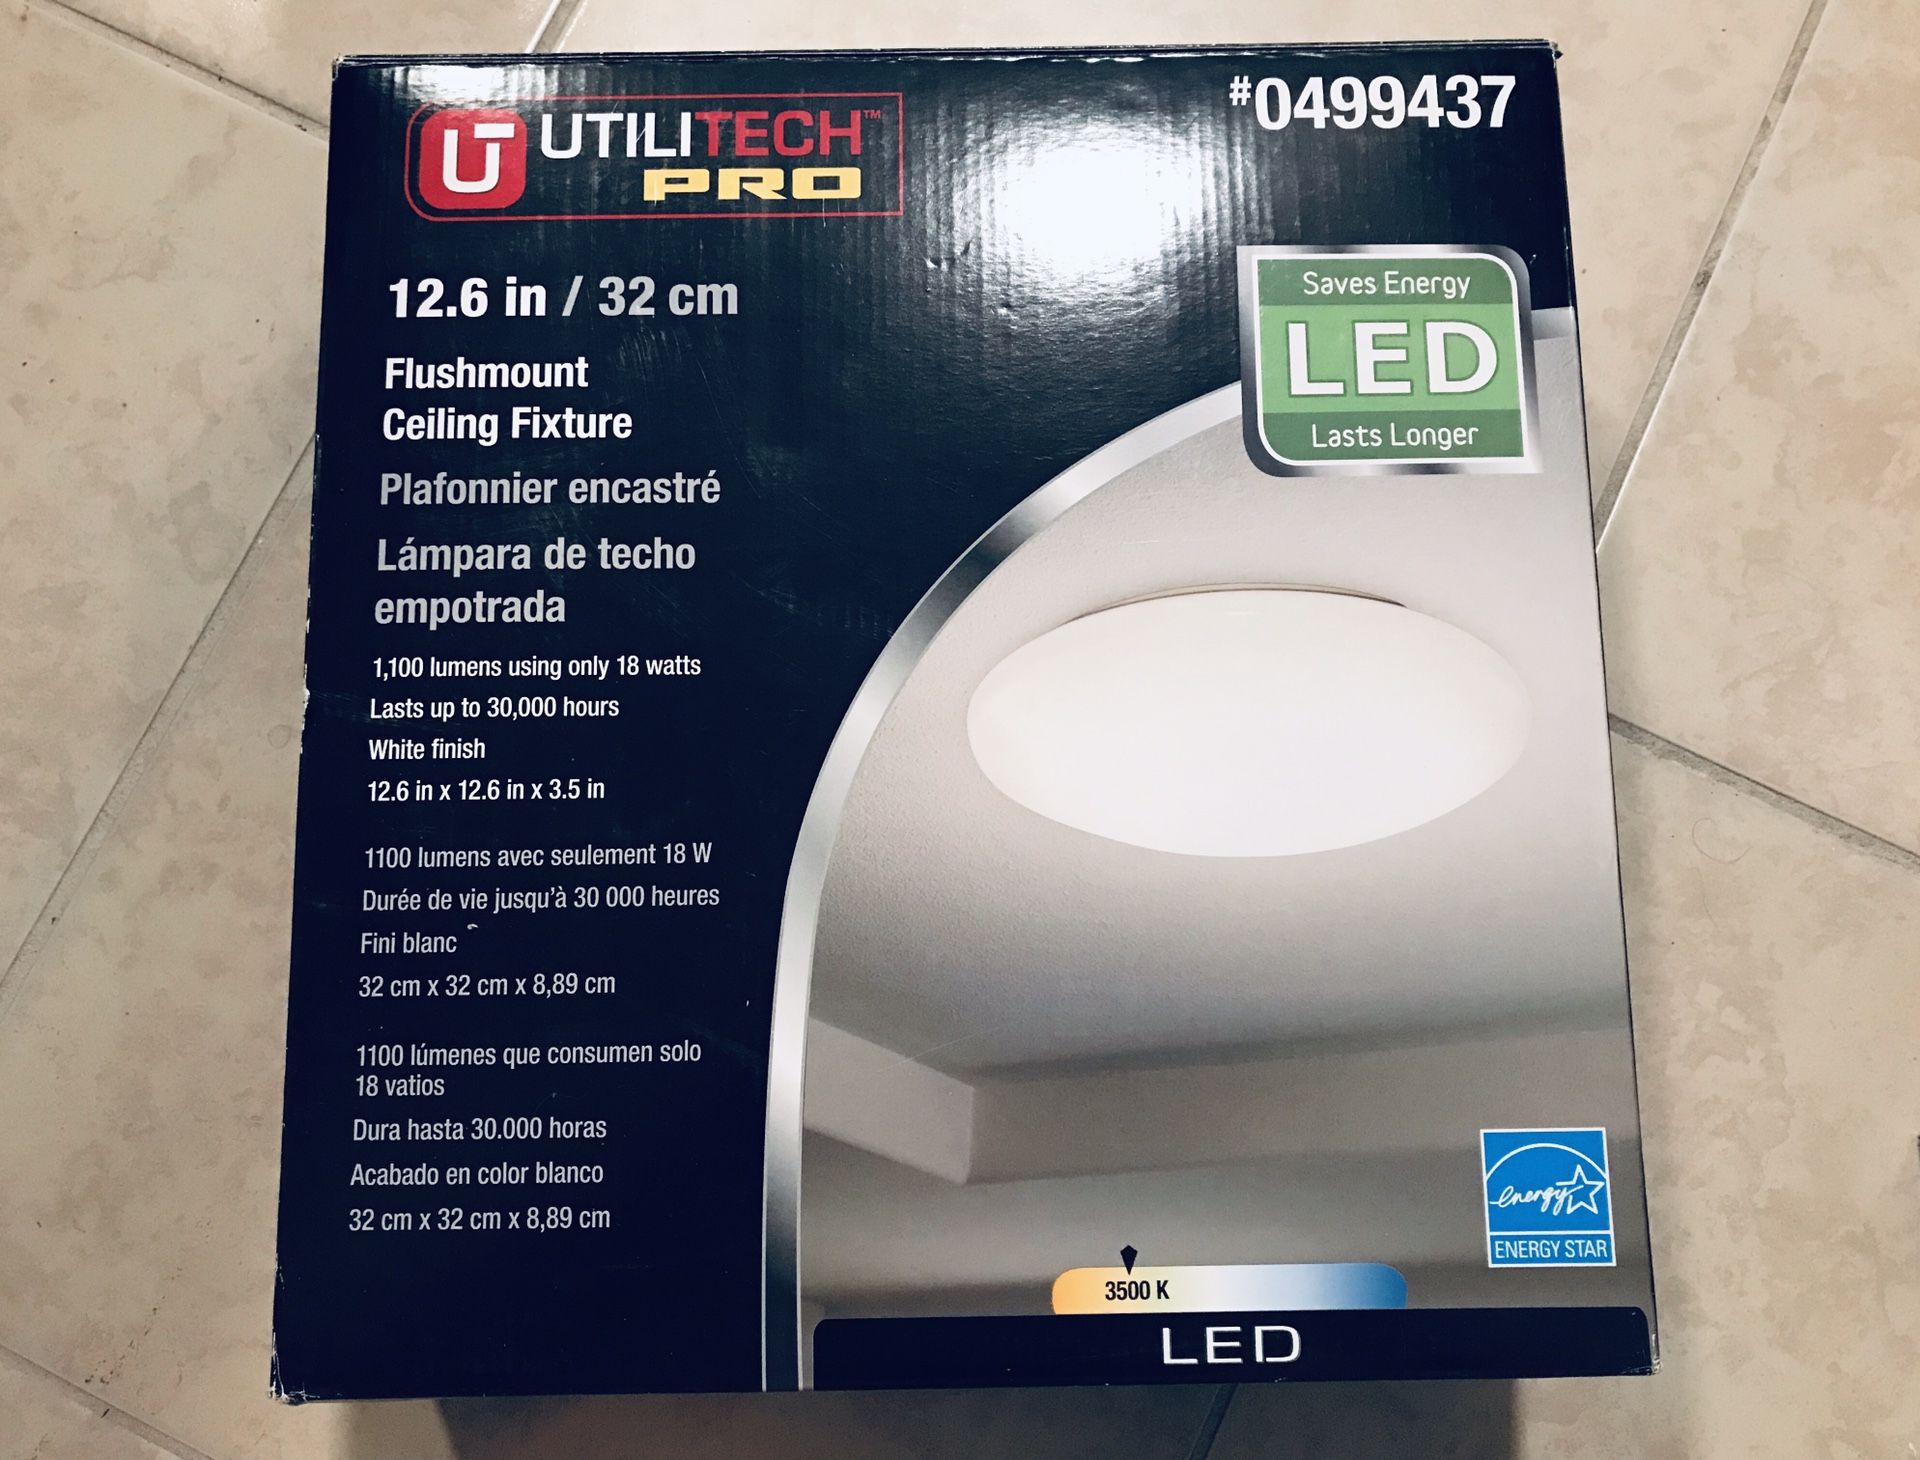 LED Light fixture (Utilitech Pro LED Flushmount Ceiling Fixture)